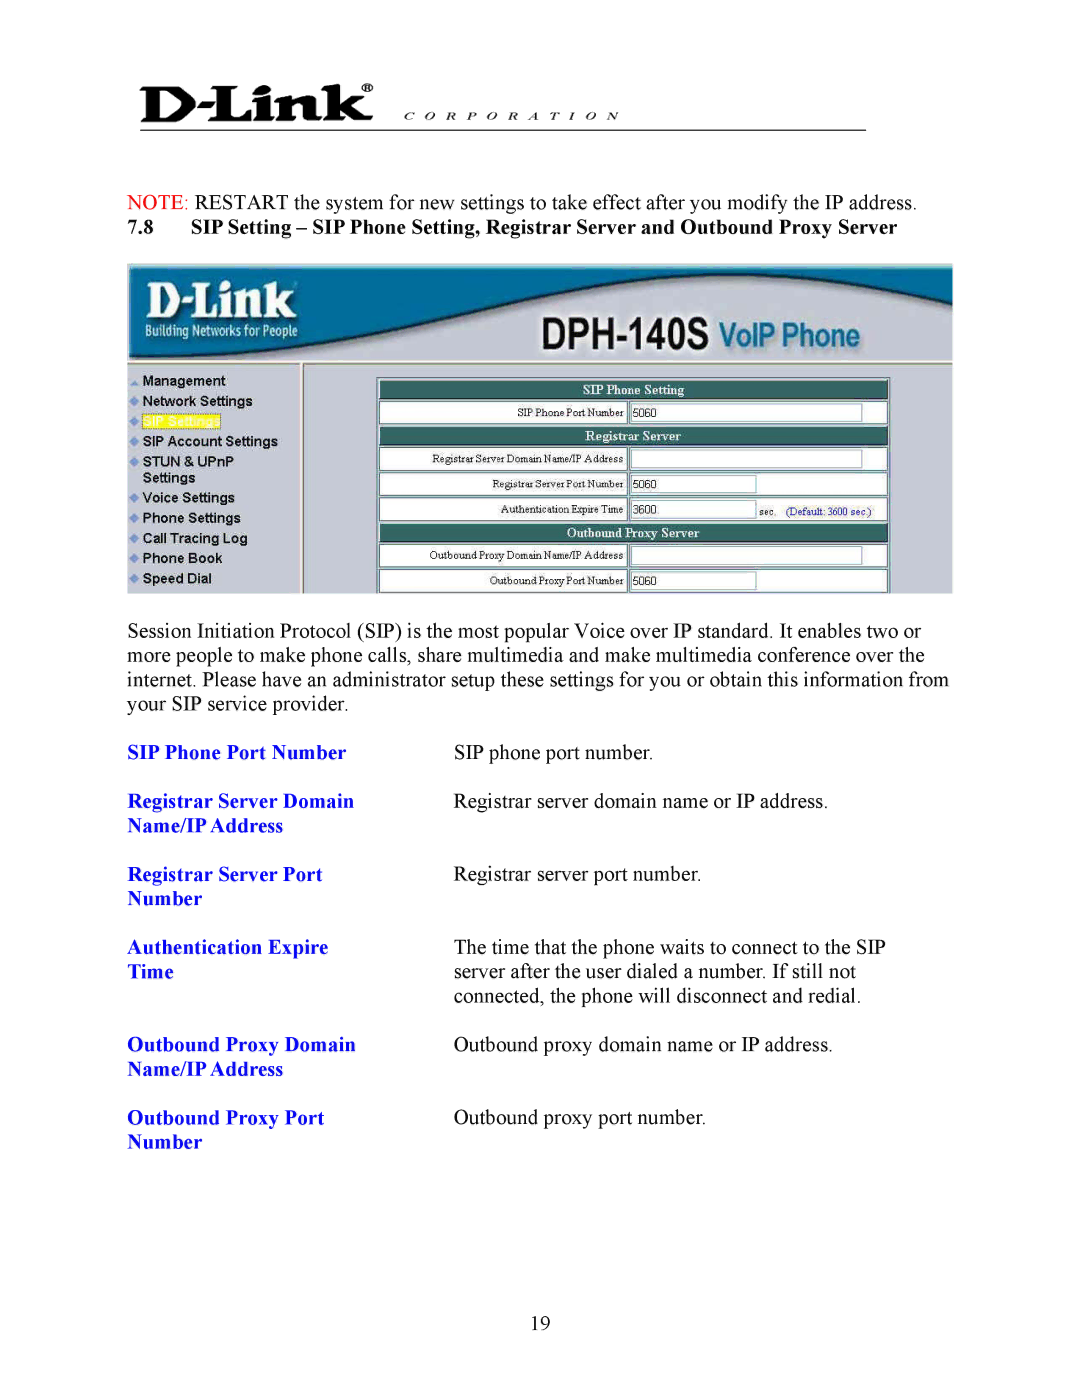 D-Link DPH-140S manual 